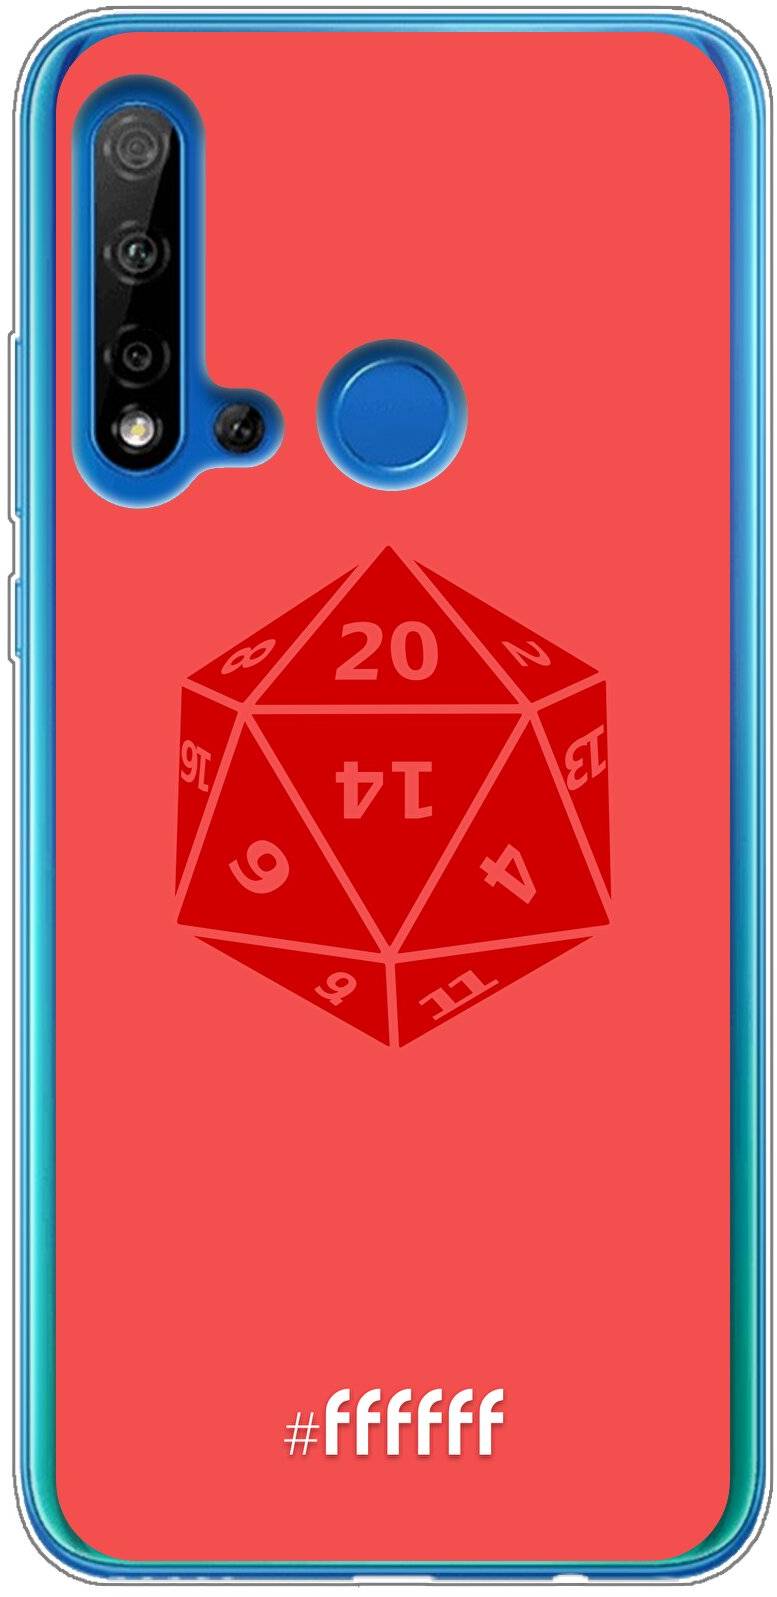 D20 - Red P20 Lite (2019)